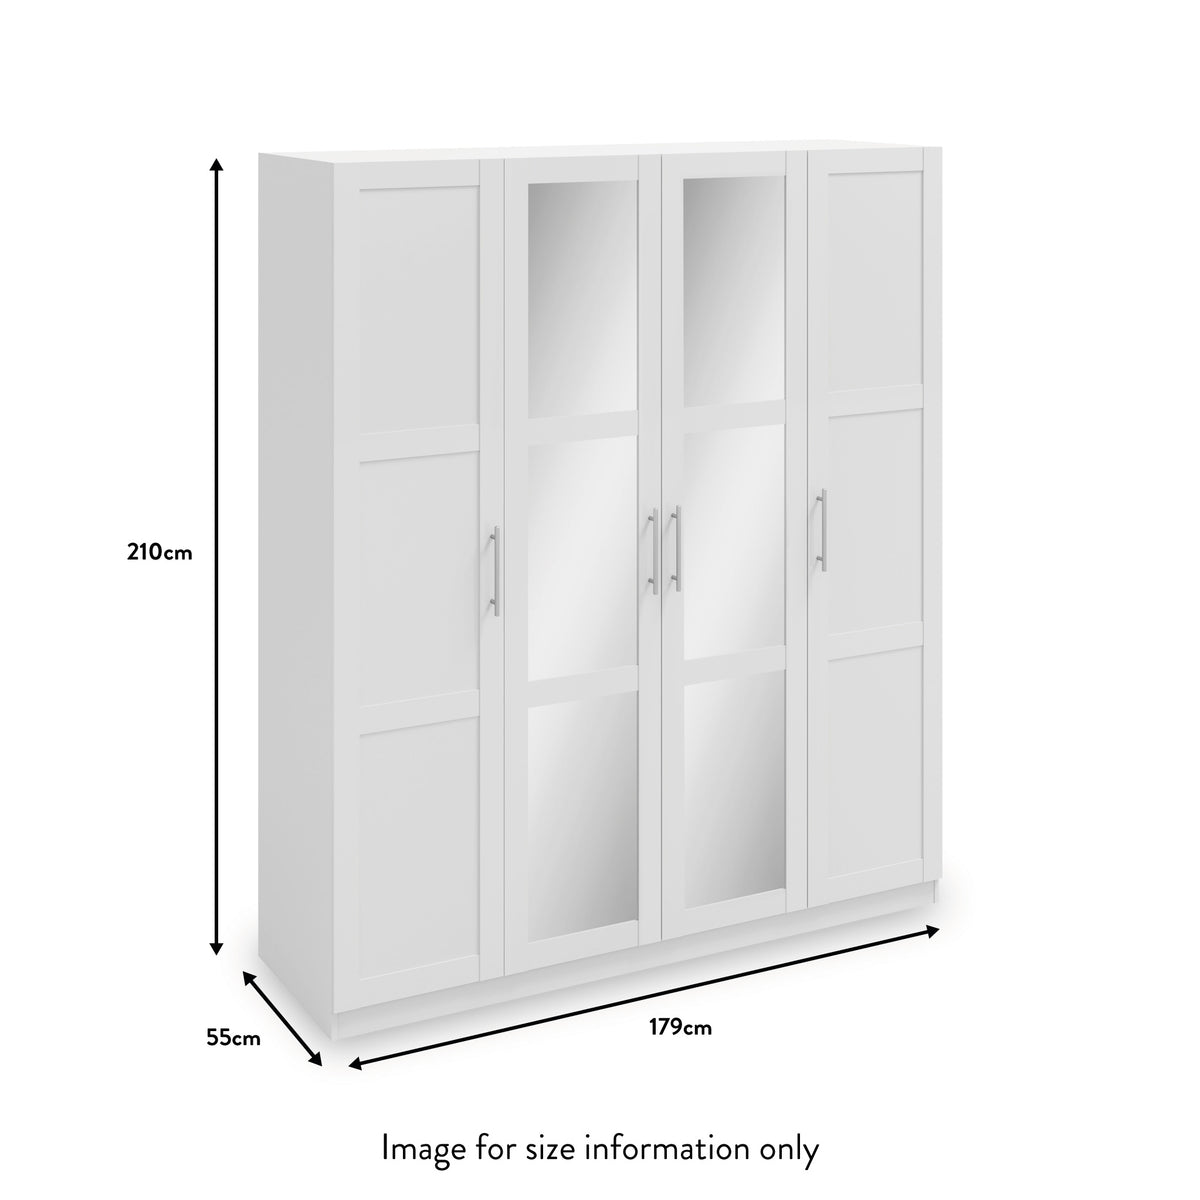 Bithlo White 4 Door Mirrored Wardrobe dimensions